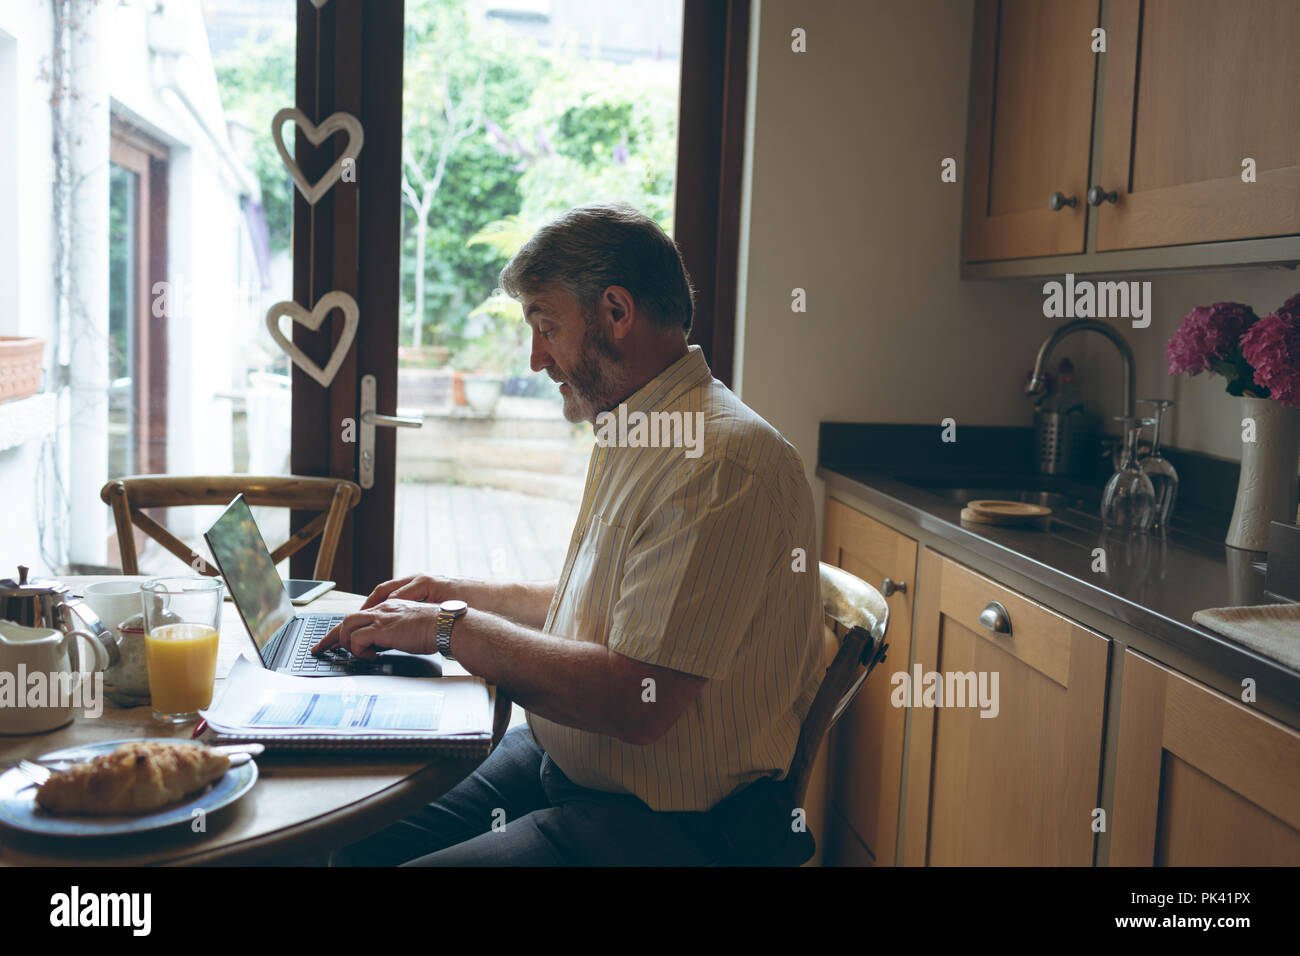 Senior man using digital tablet on dining tablet at home Stock Photo